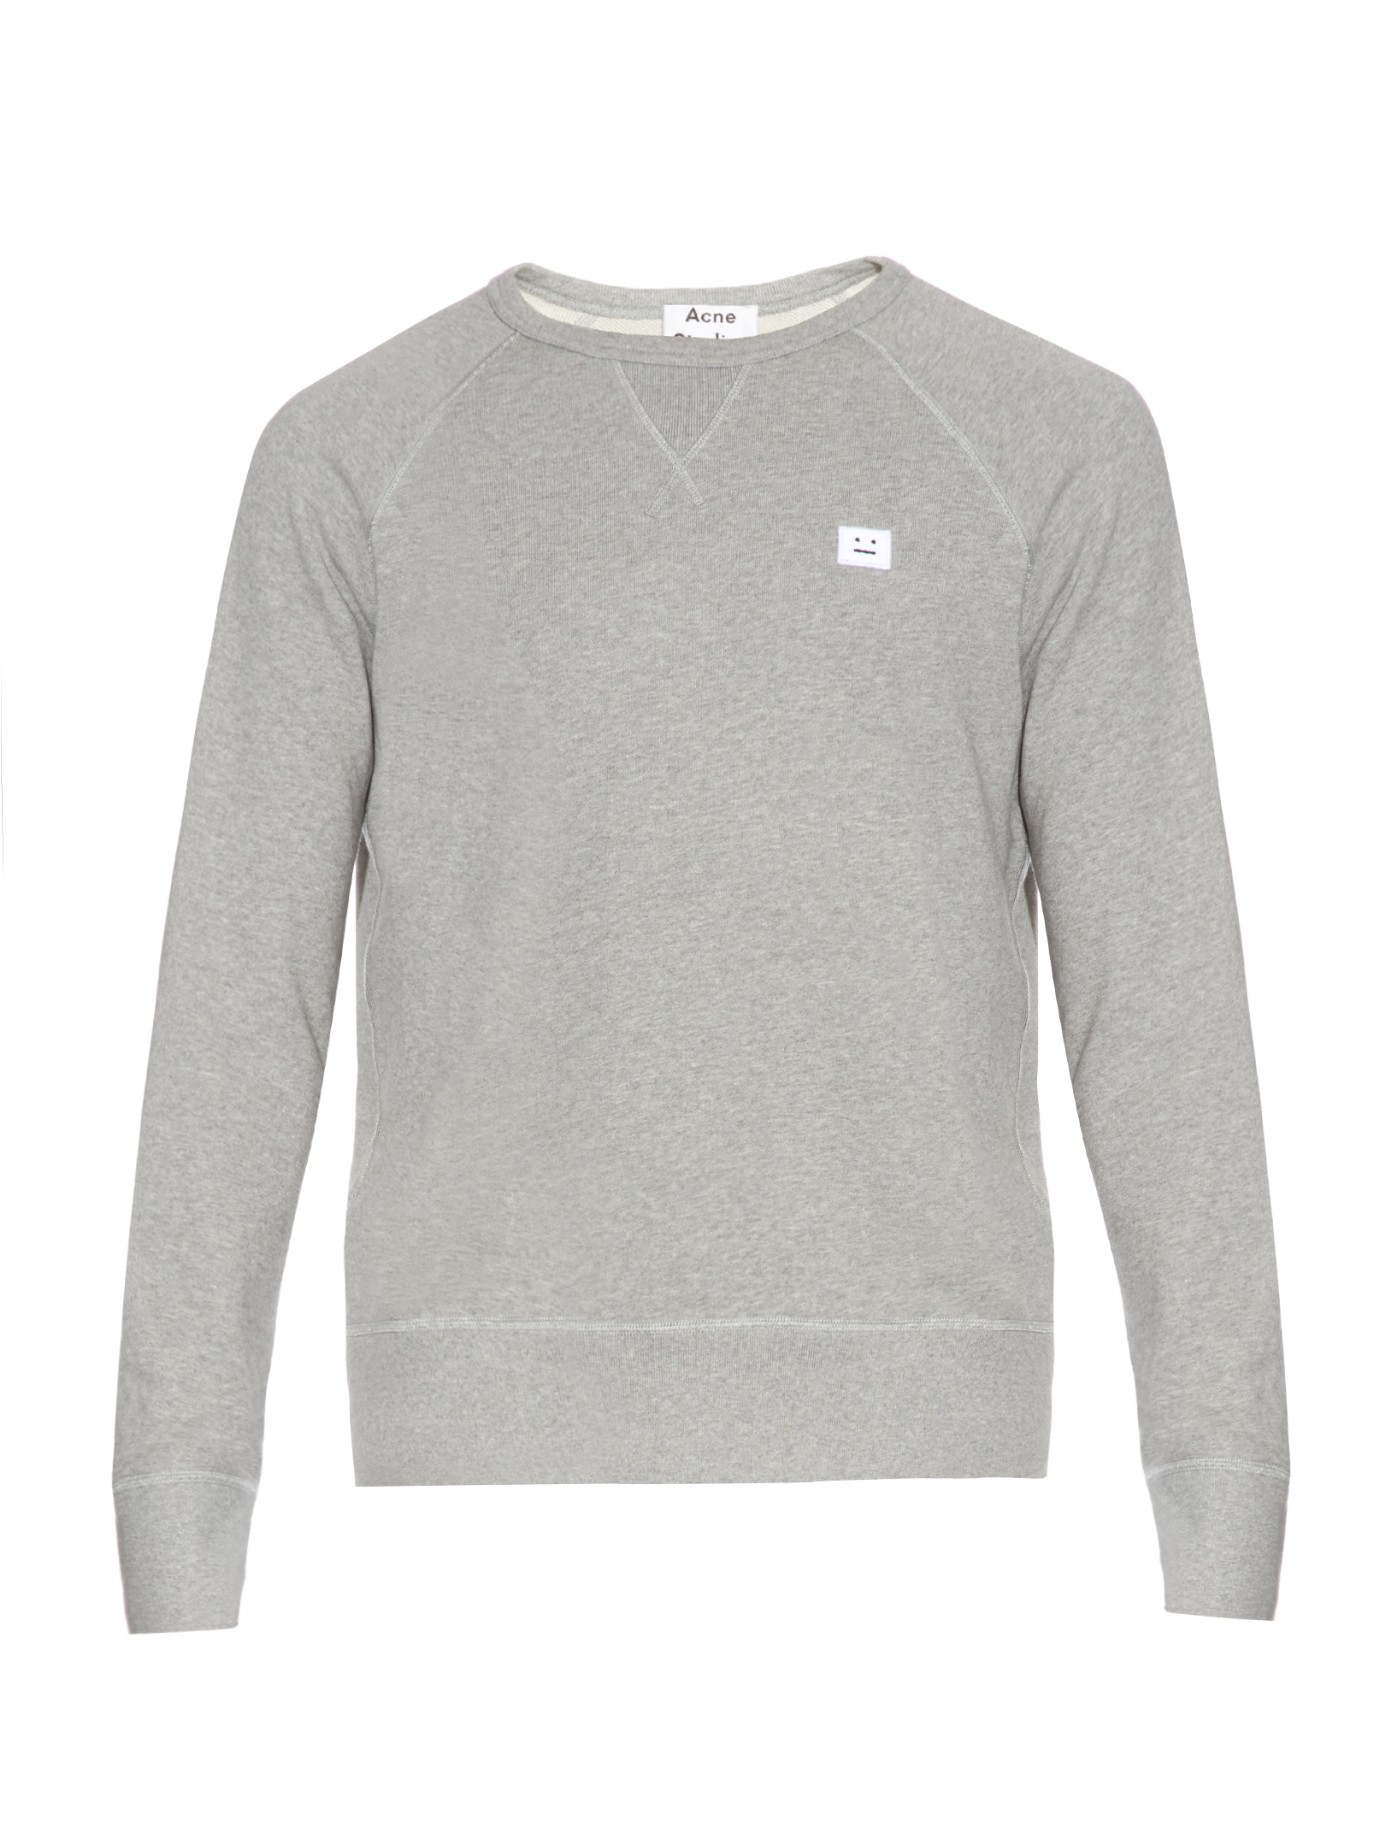 Acne Studios College Face Jersey Sweatshirt in Gray for Men - Lyst